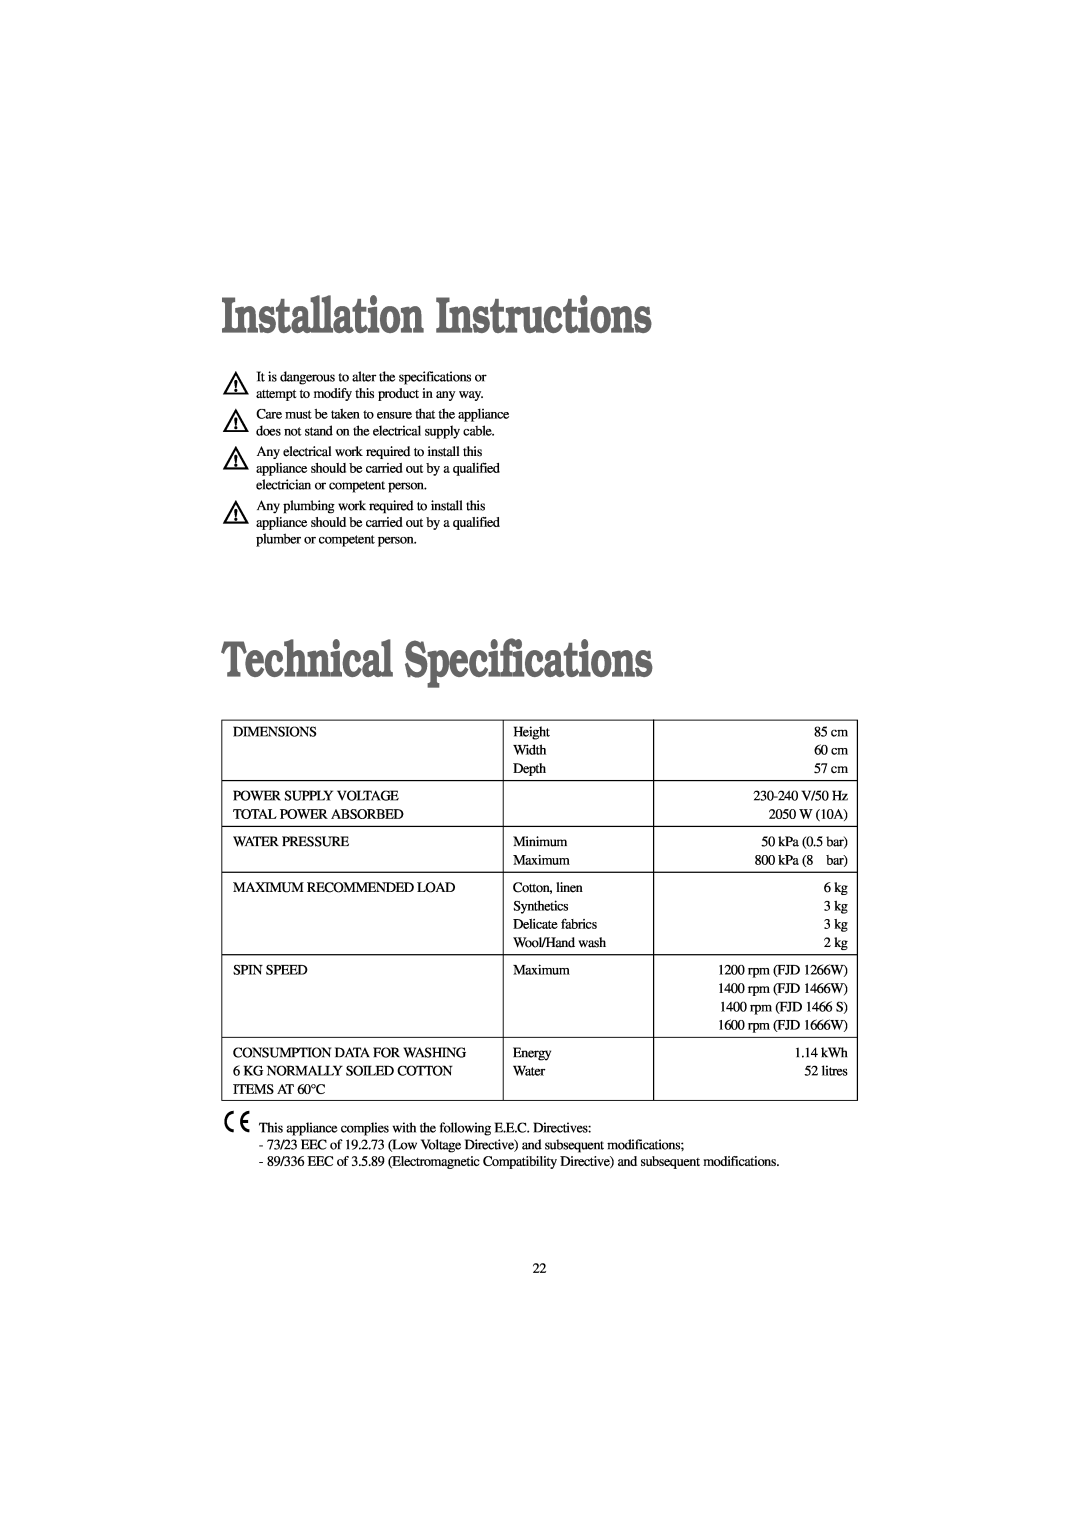 Electrolux FJD 1466 S, FJD 1666 W, FJD 1266 W, FJD 1466 W manual Installation Instructions, Technical Specifications 